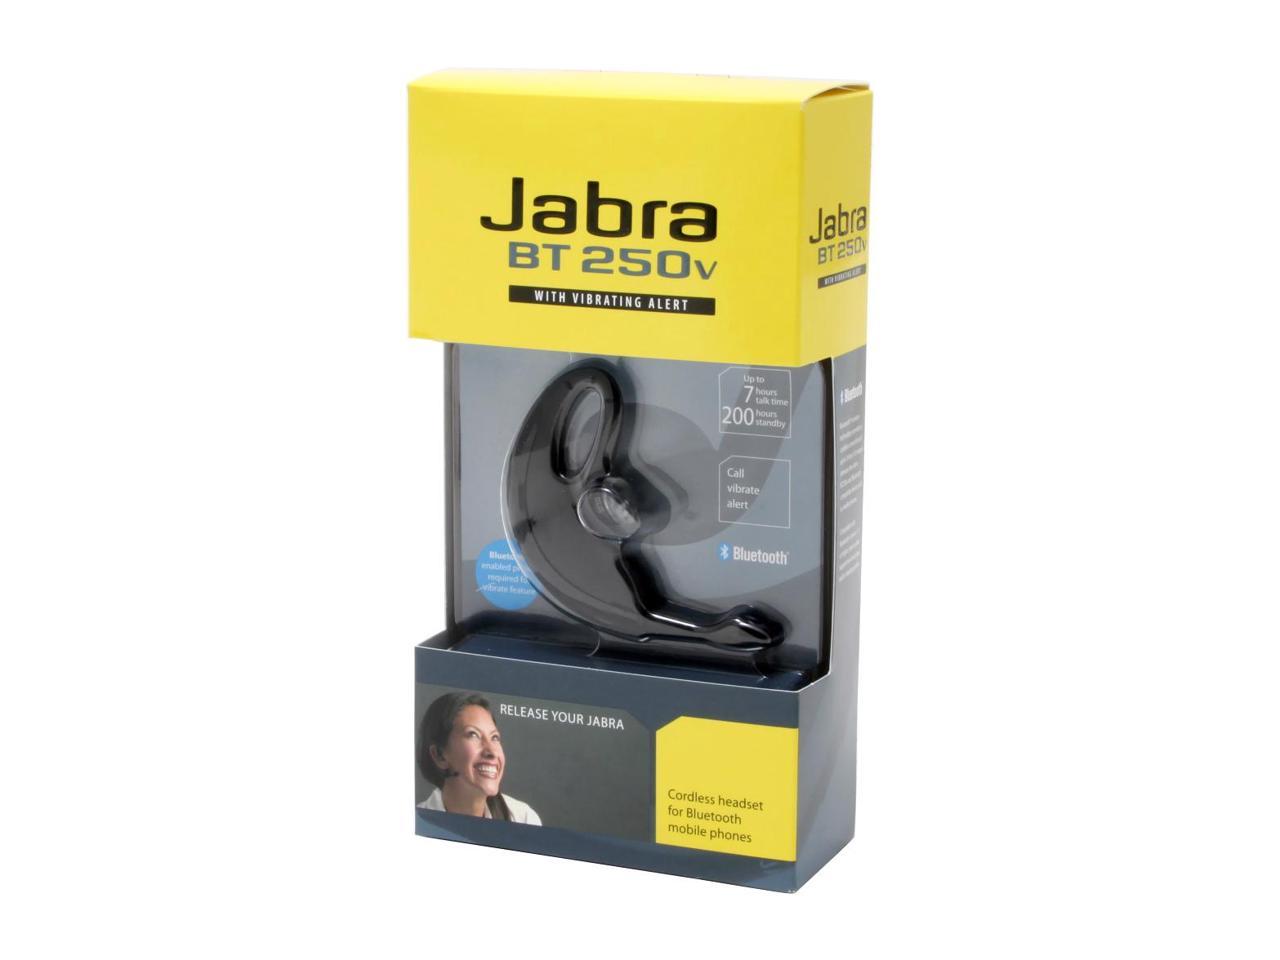 Jabra BT250V Headset - Newegg.com